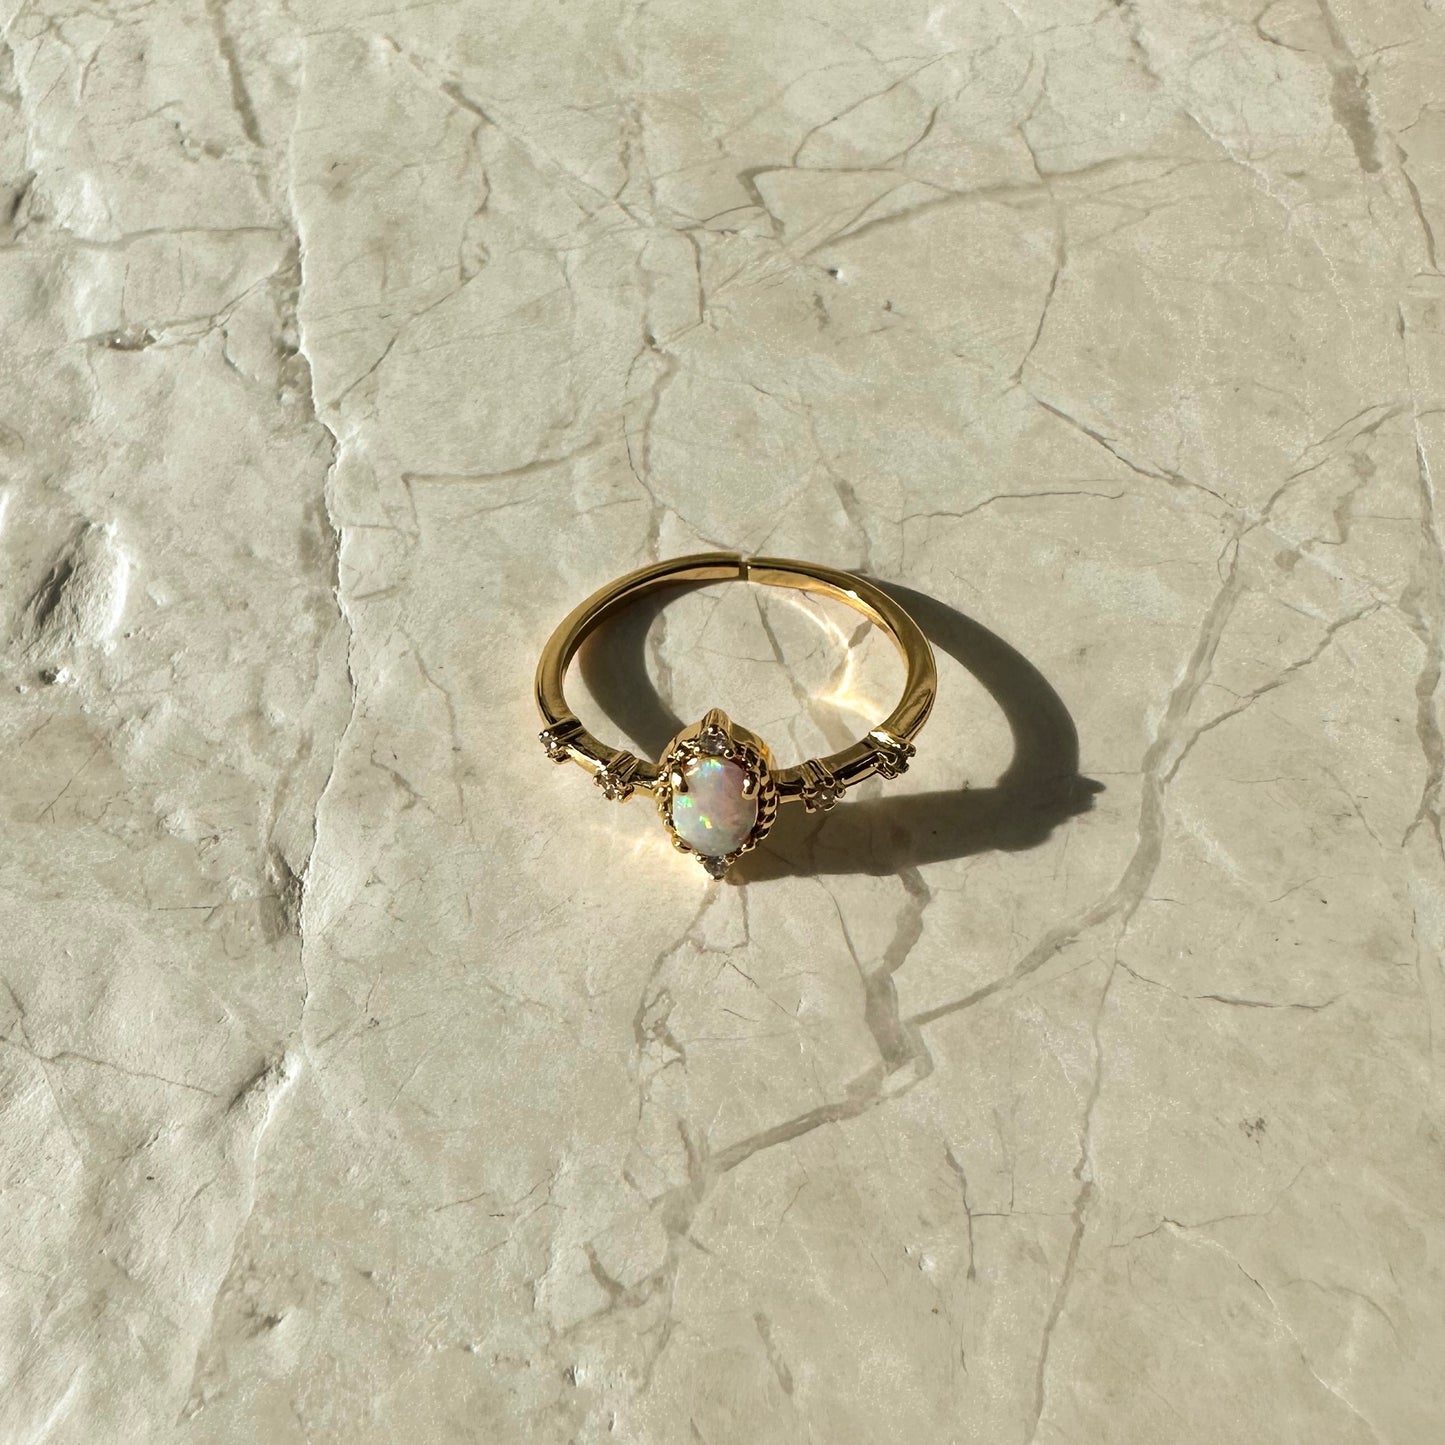 Soleil Ring